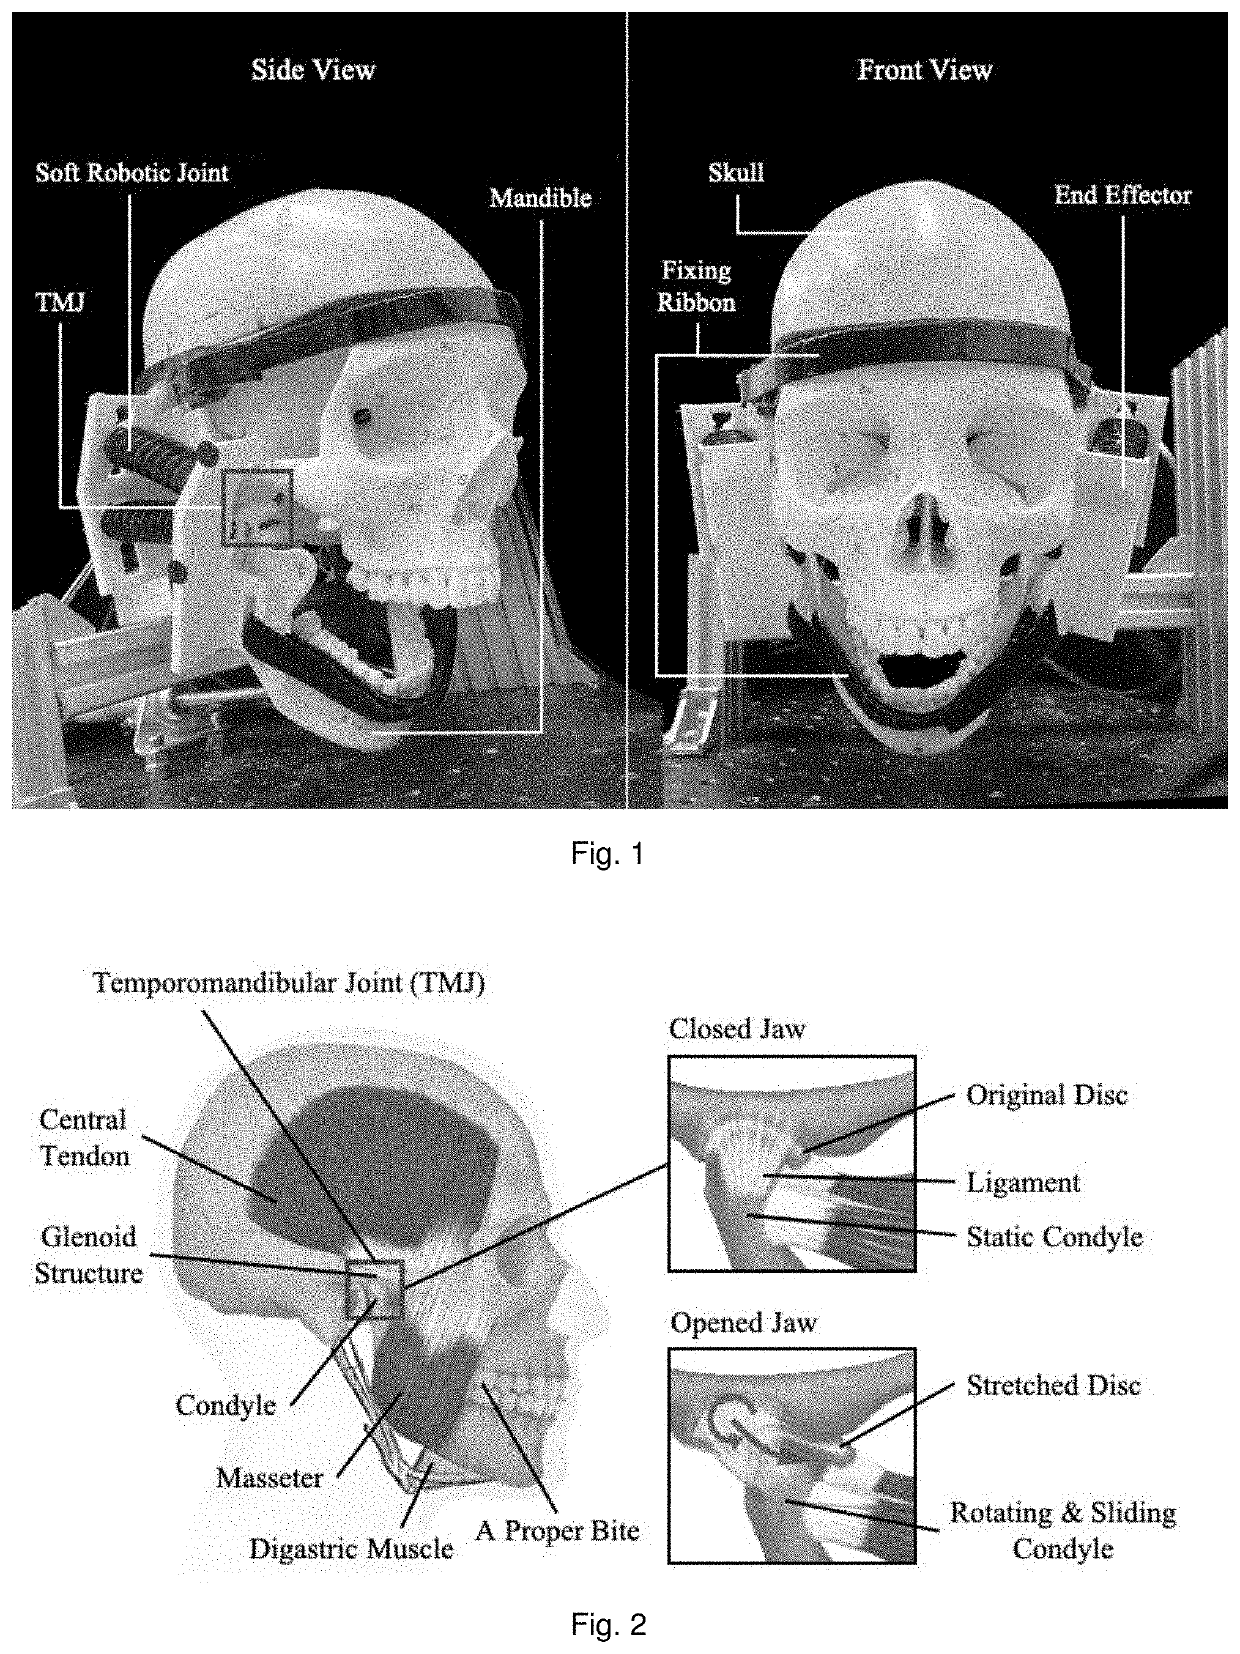 Soft exoskeleton wearable device for temporomandibular disorder (TMD) rehabilitation